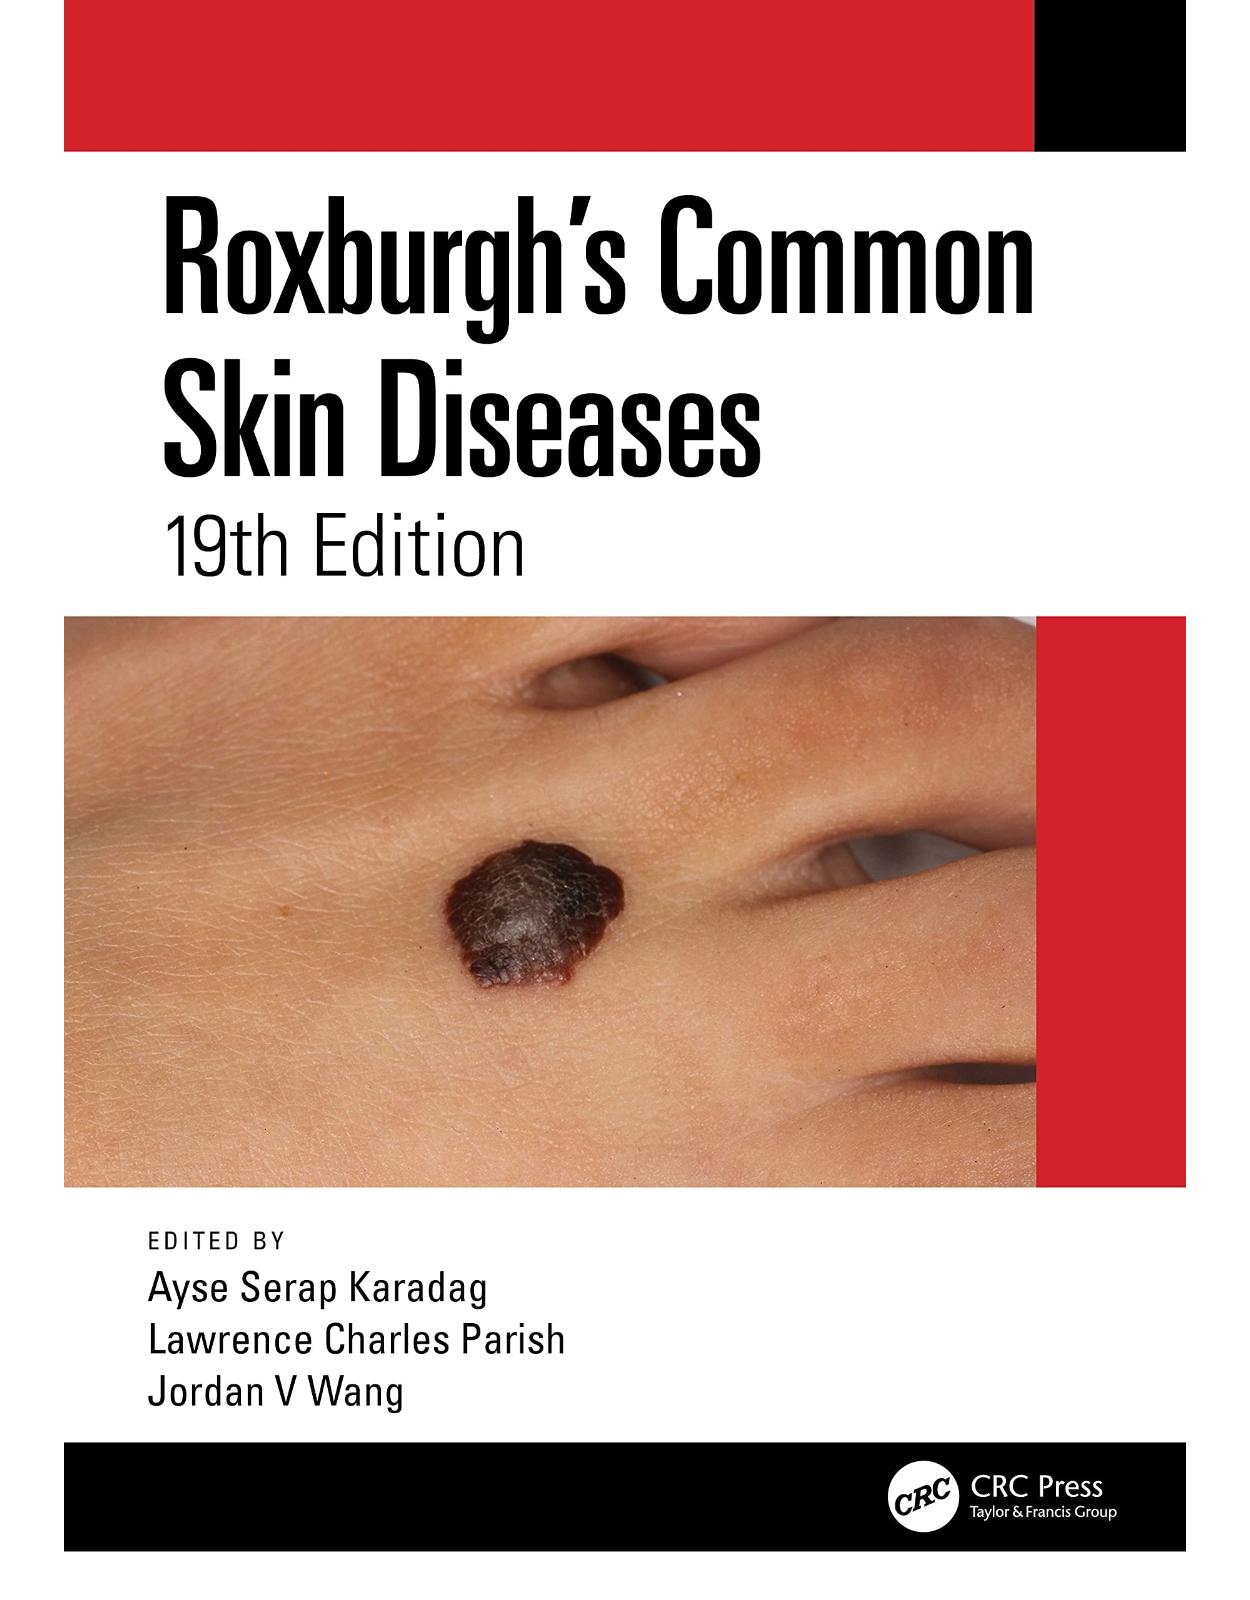 Roxburgh’s Common Skin Diseases